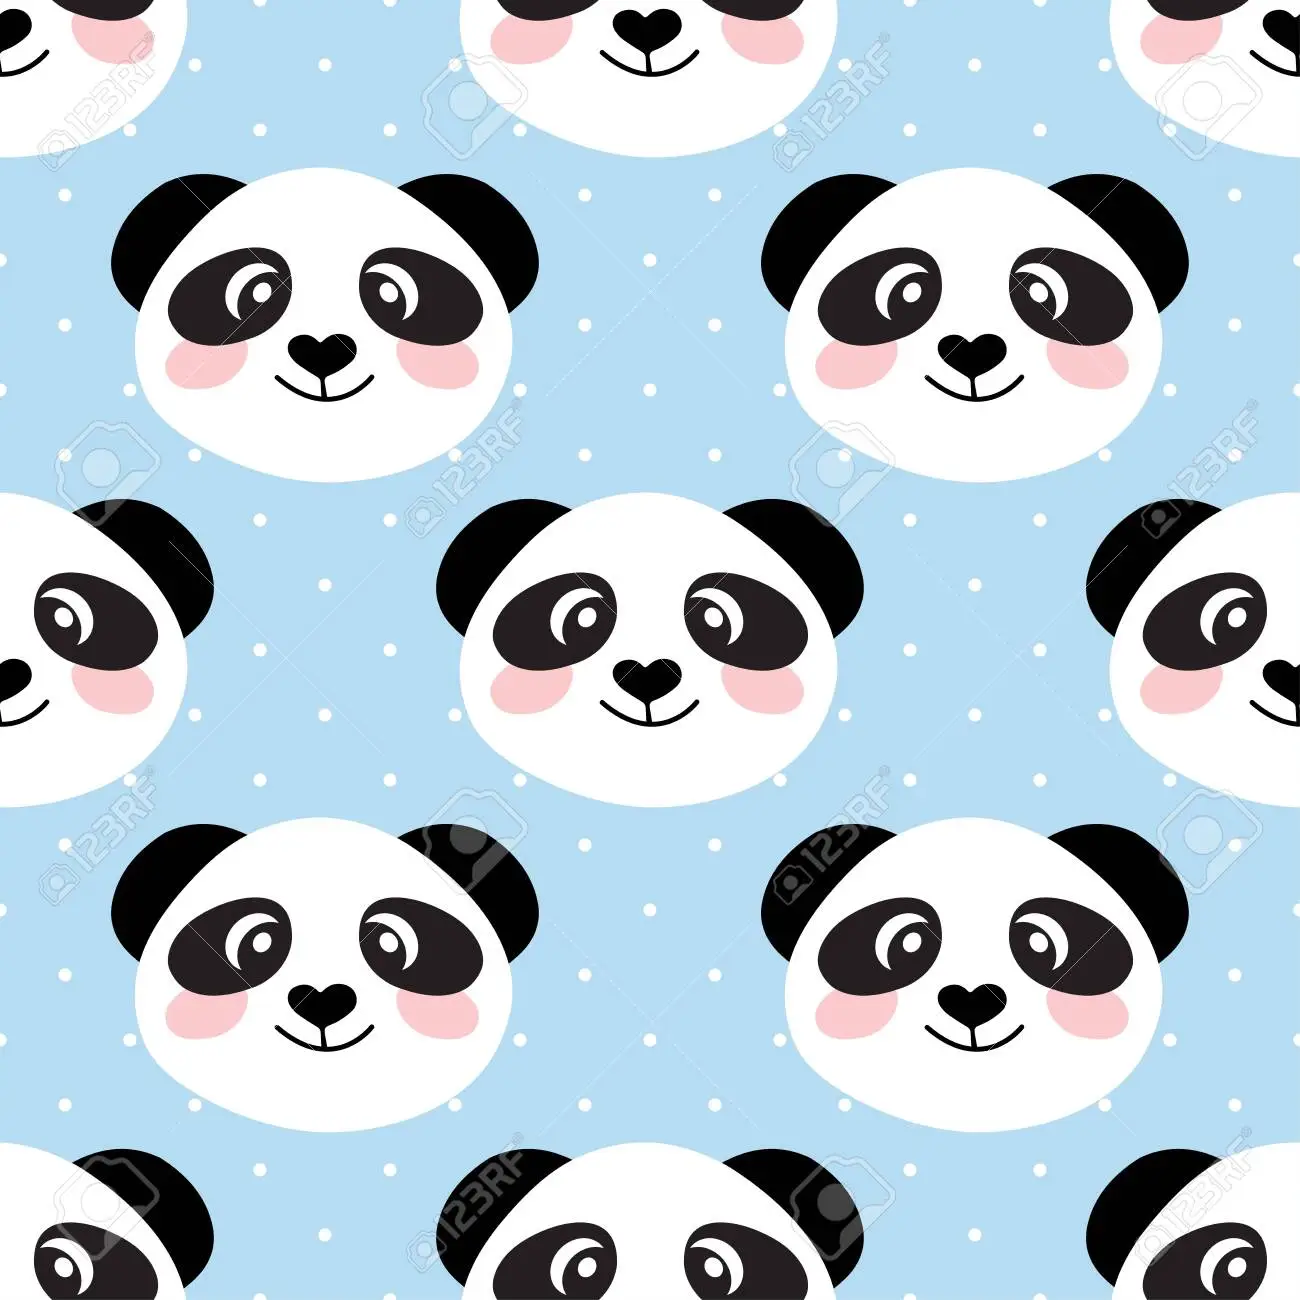 Cute panda face seamless cartoon wallpaper royalty free svg cliparts vectors and stock illustration image